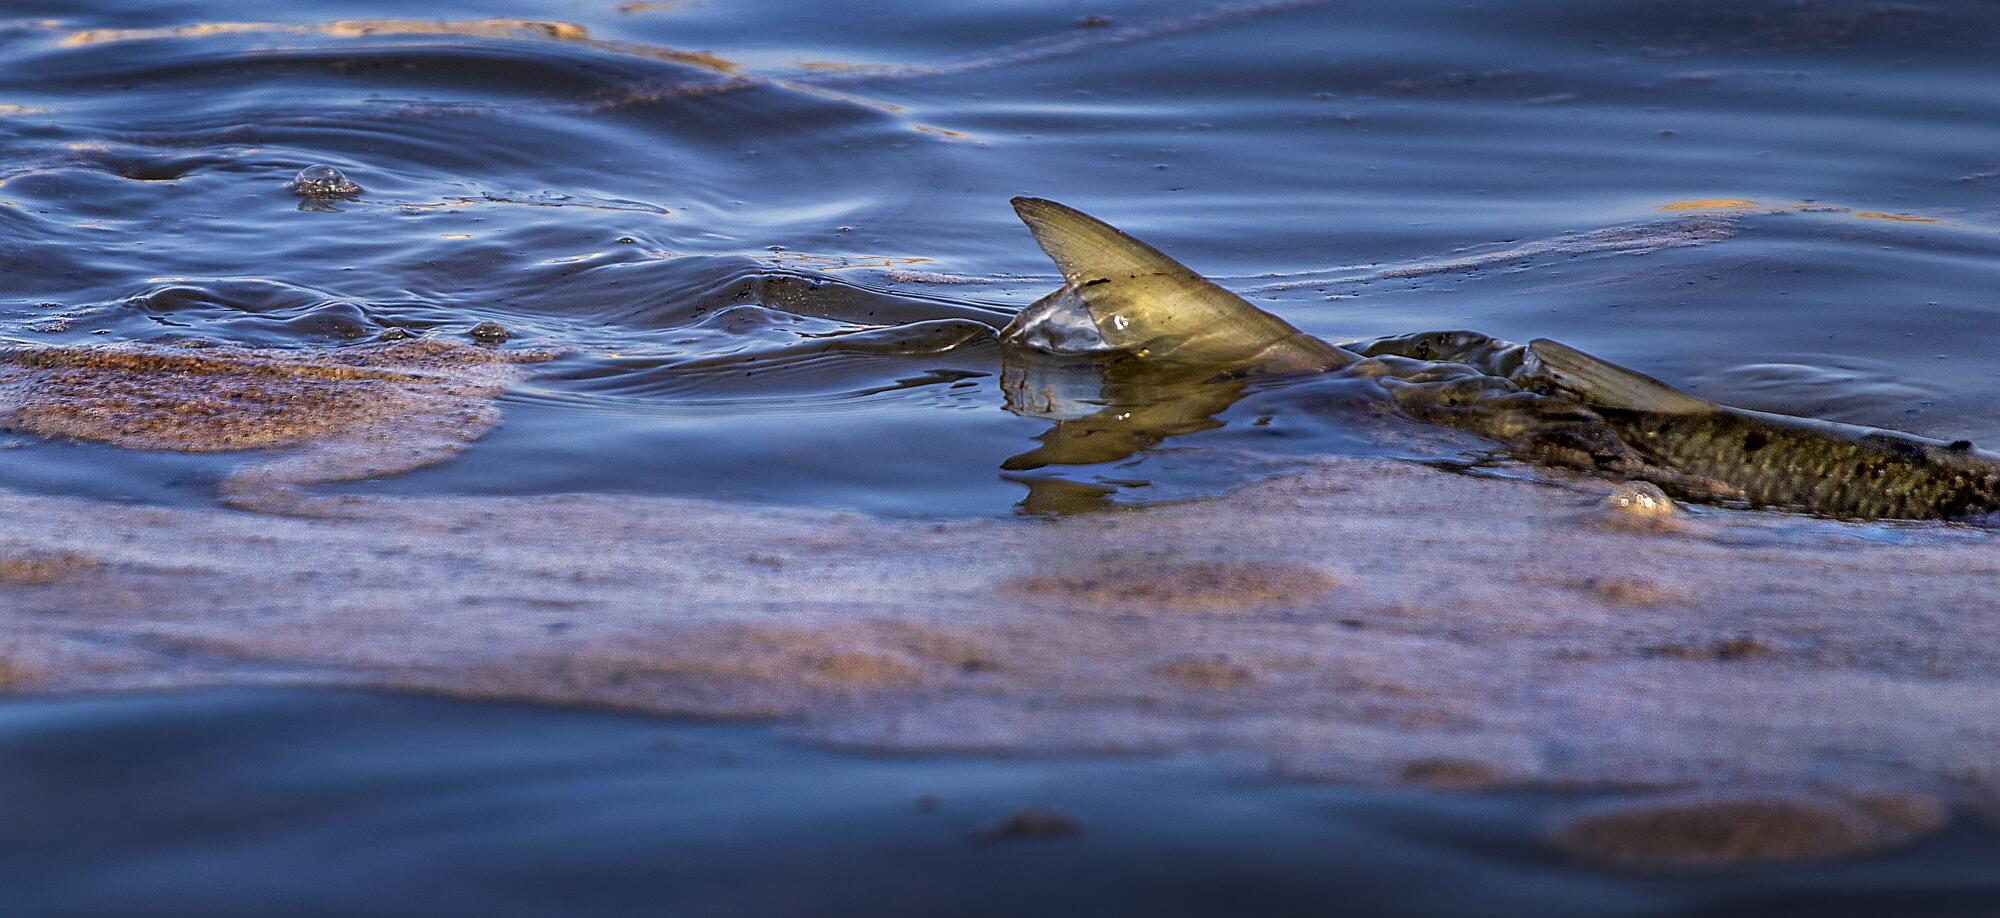 A fish swims amid globs of oil off the Orange County coast